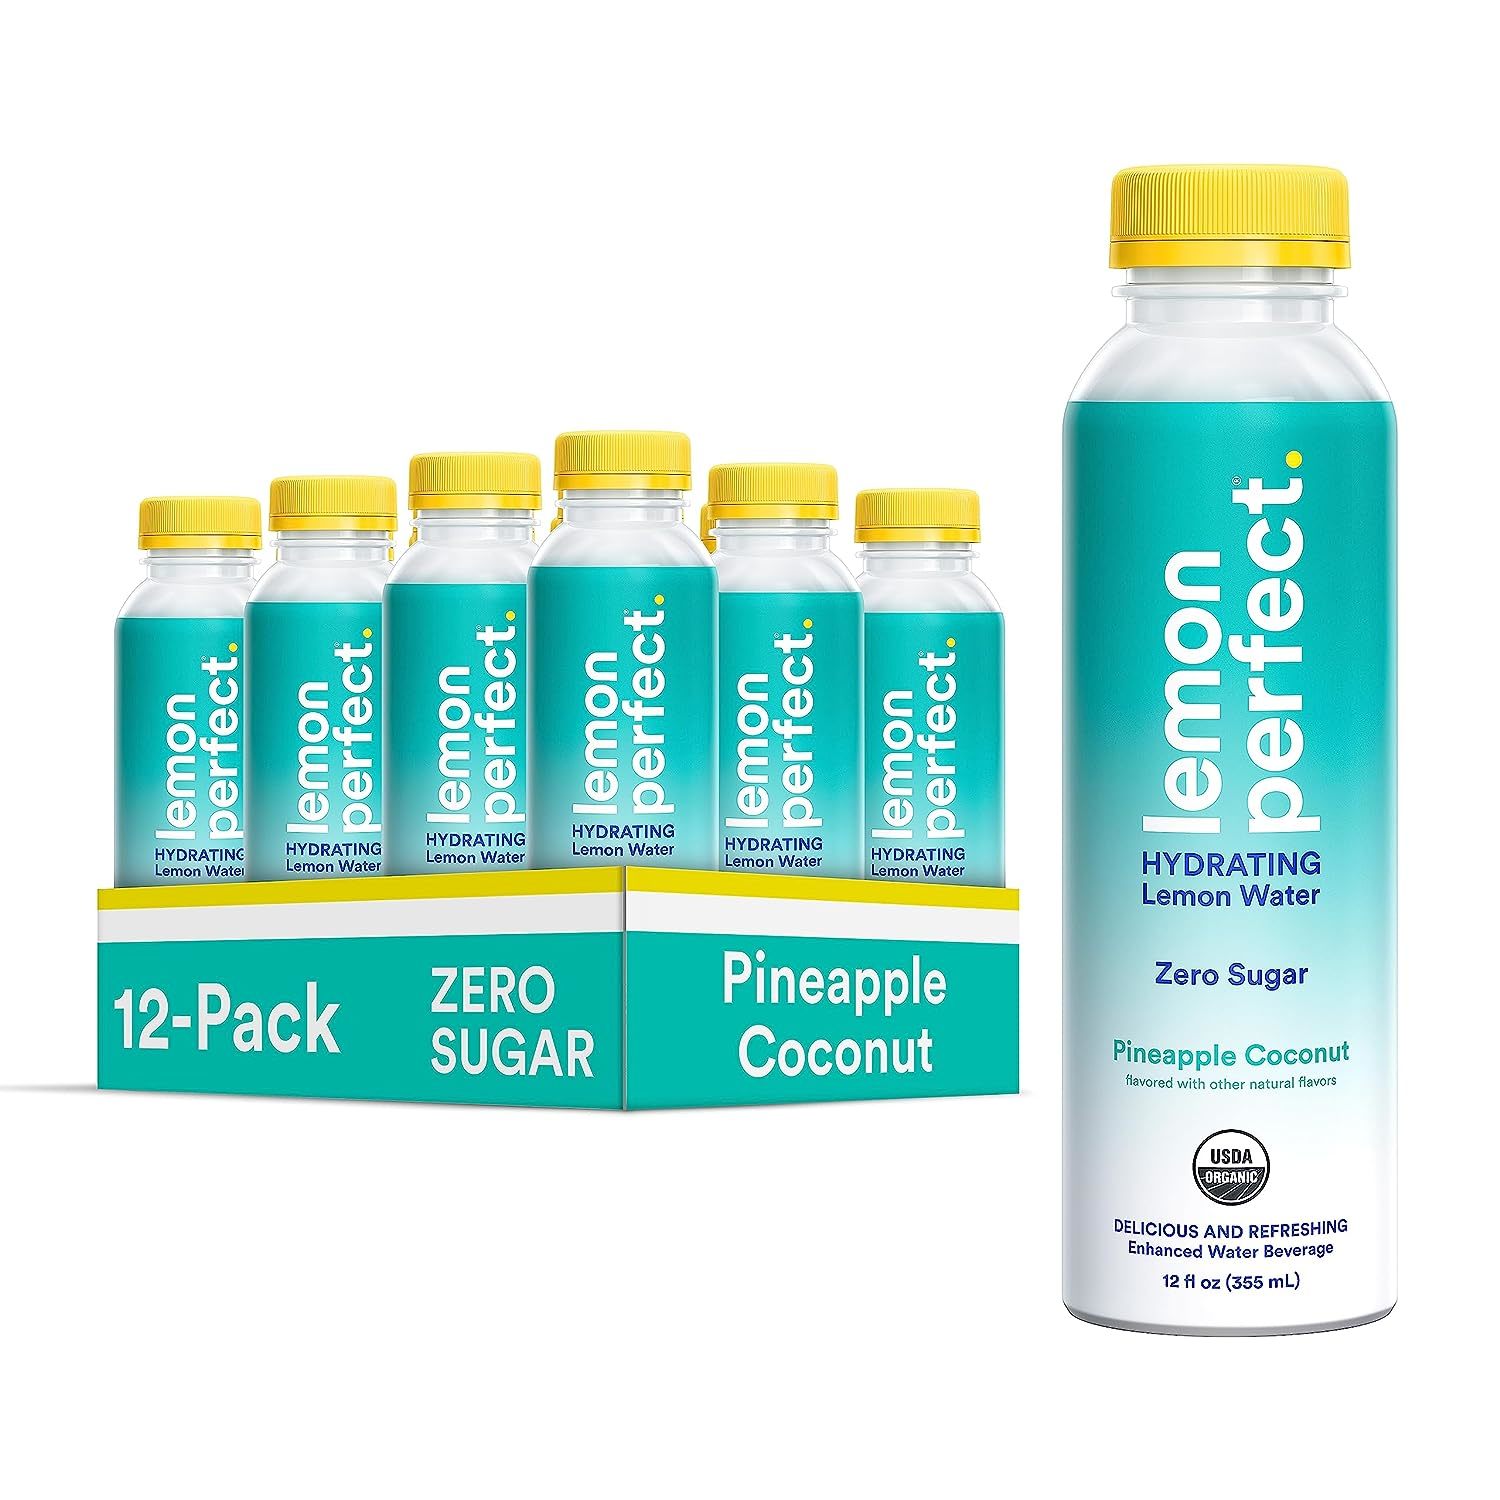 Lemon Perfect Pineapple Coconut (12-pack) Hydrating Organic Lemon Water - $38.99